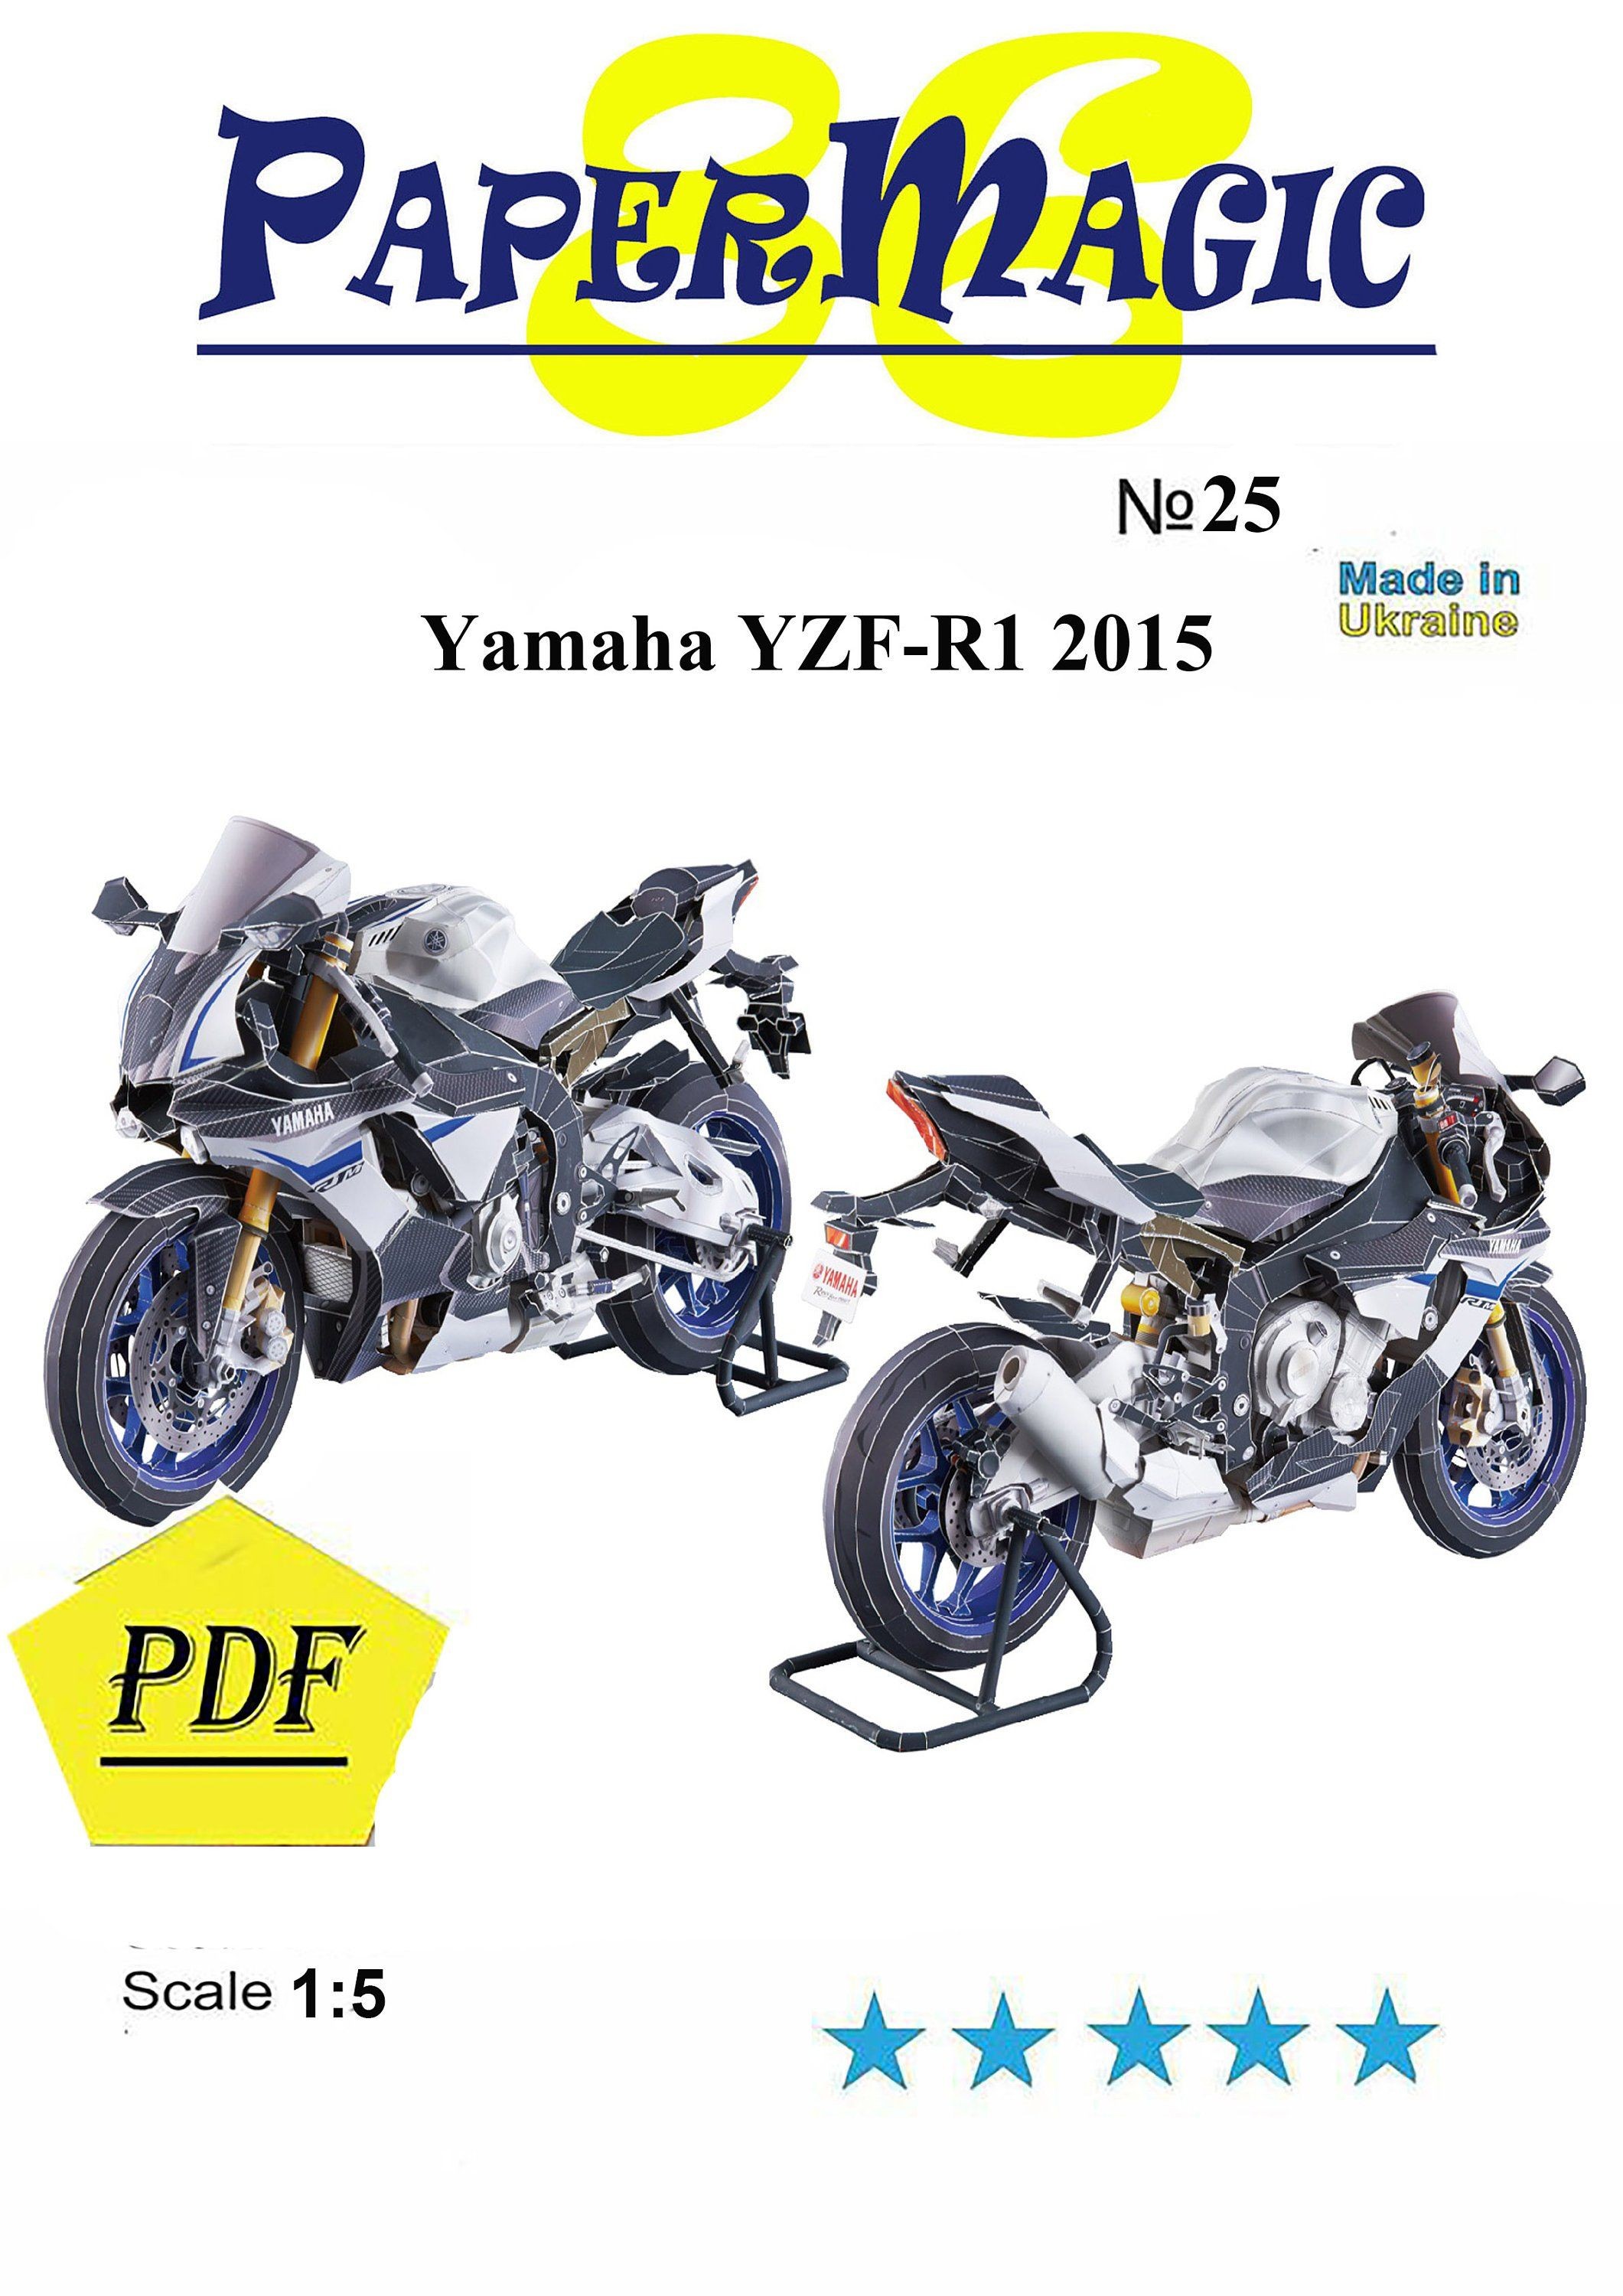 Yamaha Papercraft Motorcycle Paper Model Kit Yamaha Yzf R1 2015 Papercraft 3d Paper Craft Model